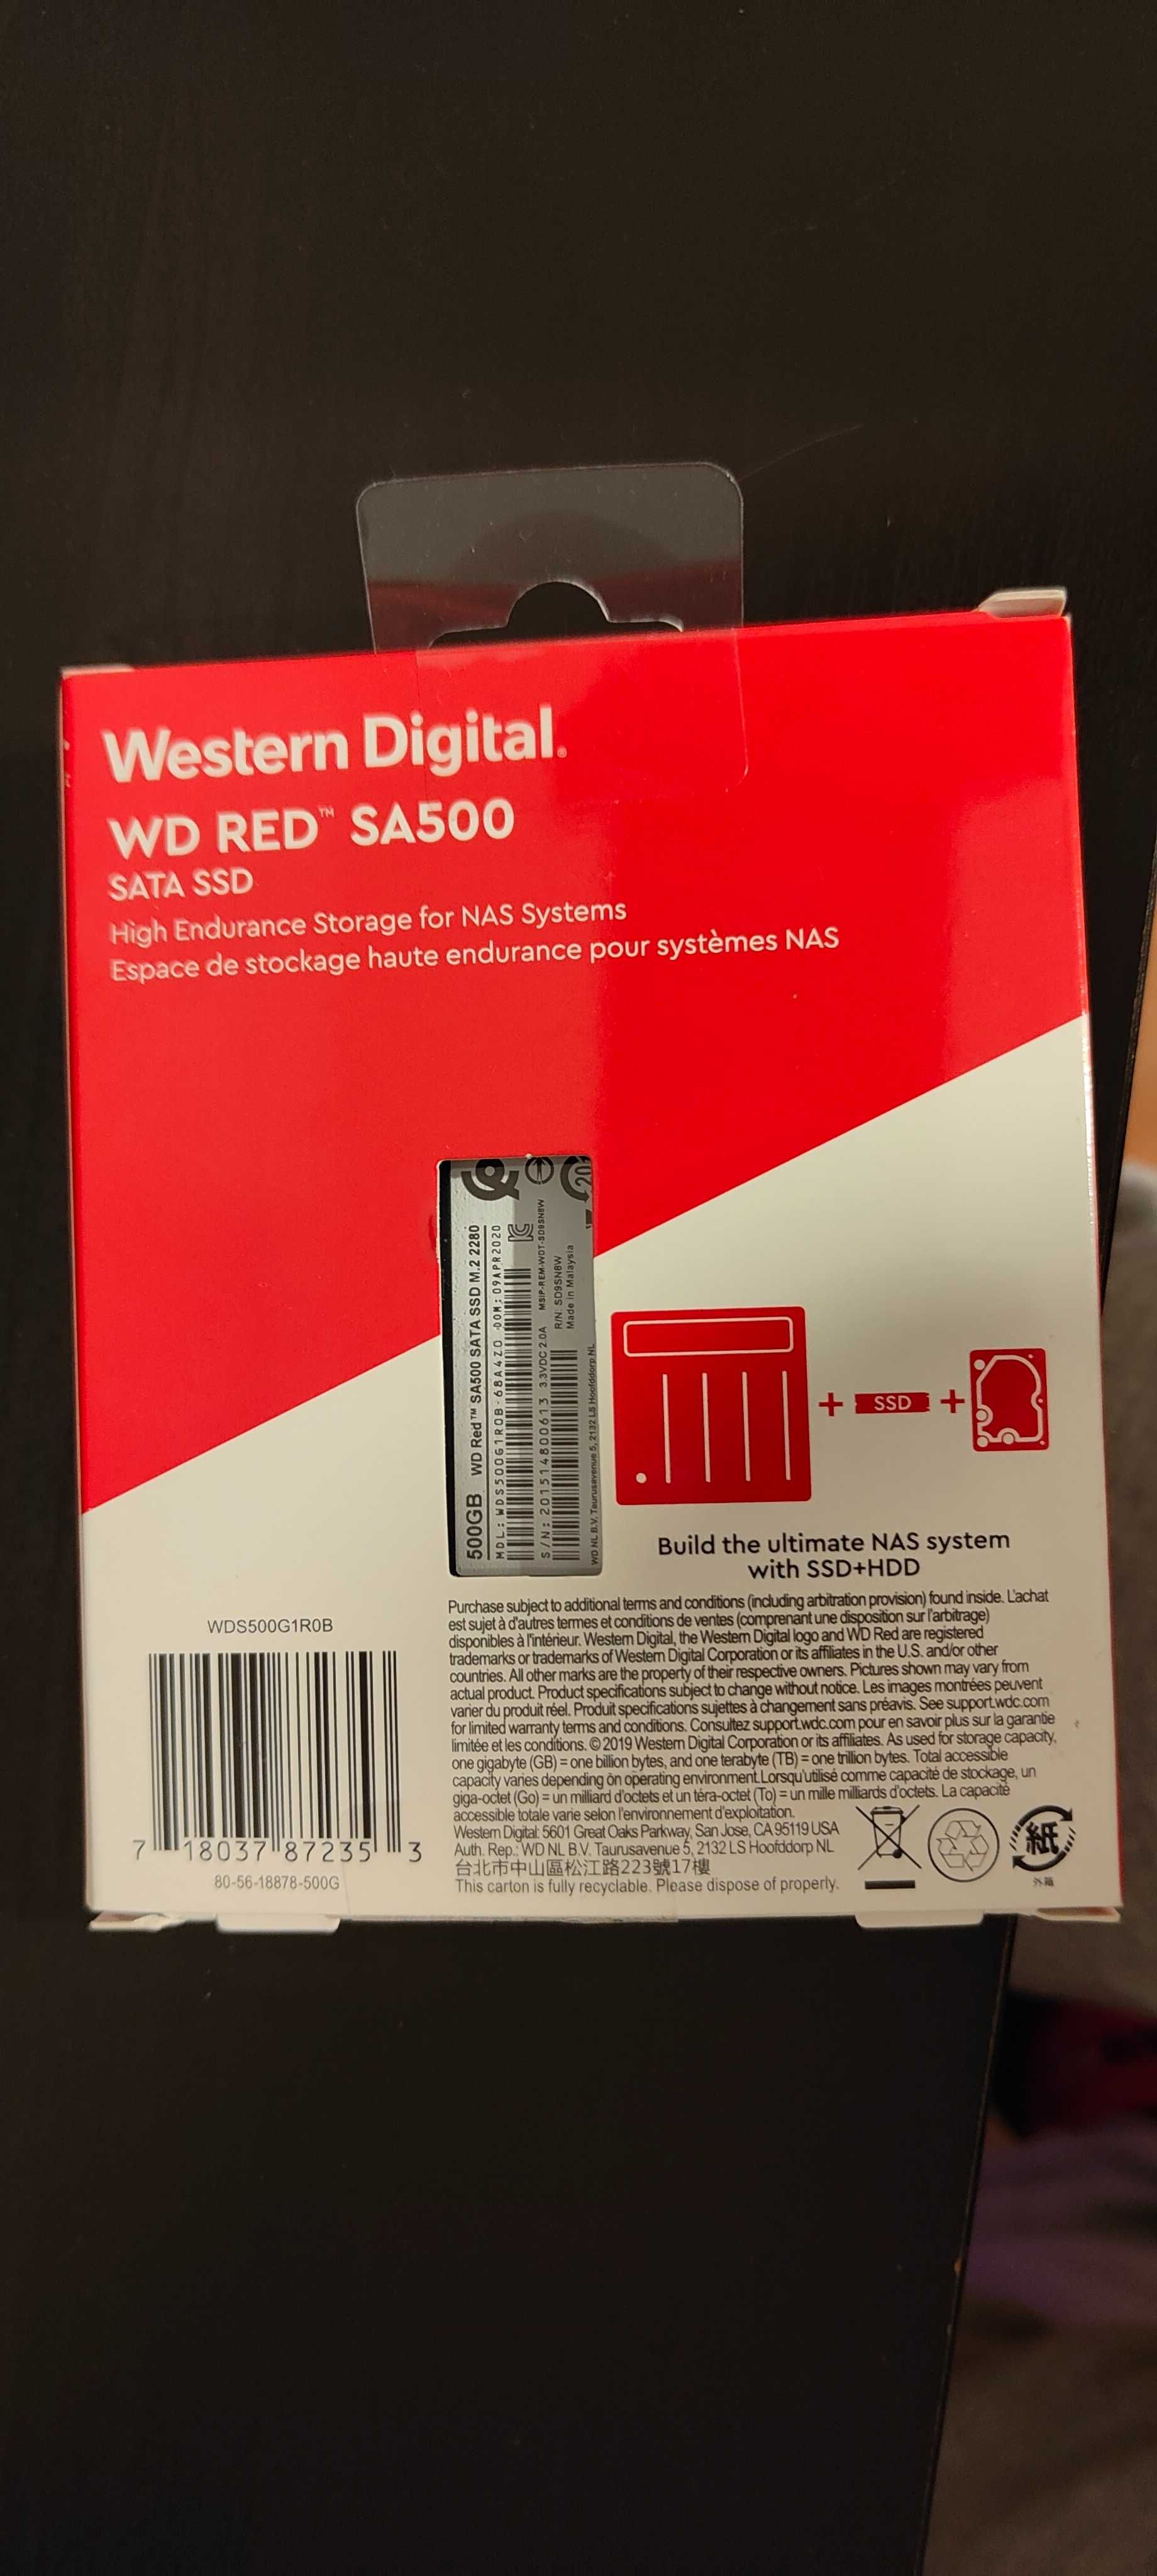 SSD SATA M.2 2280 Western Digital RED SA500 500GB nou